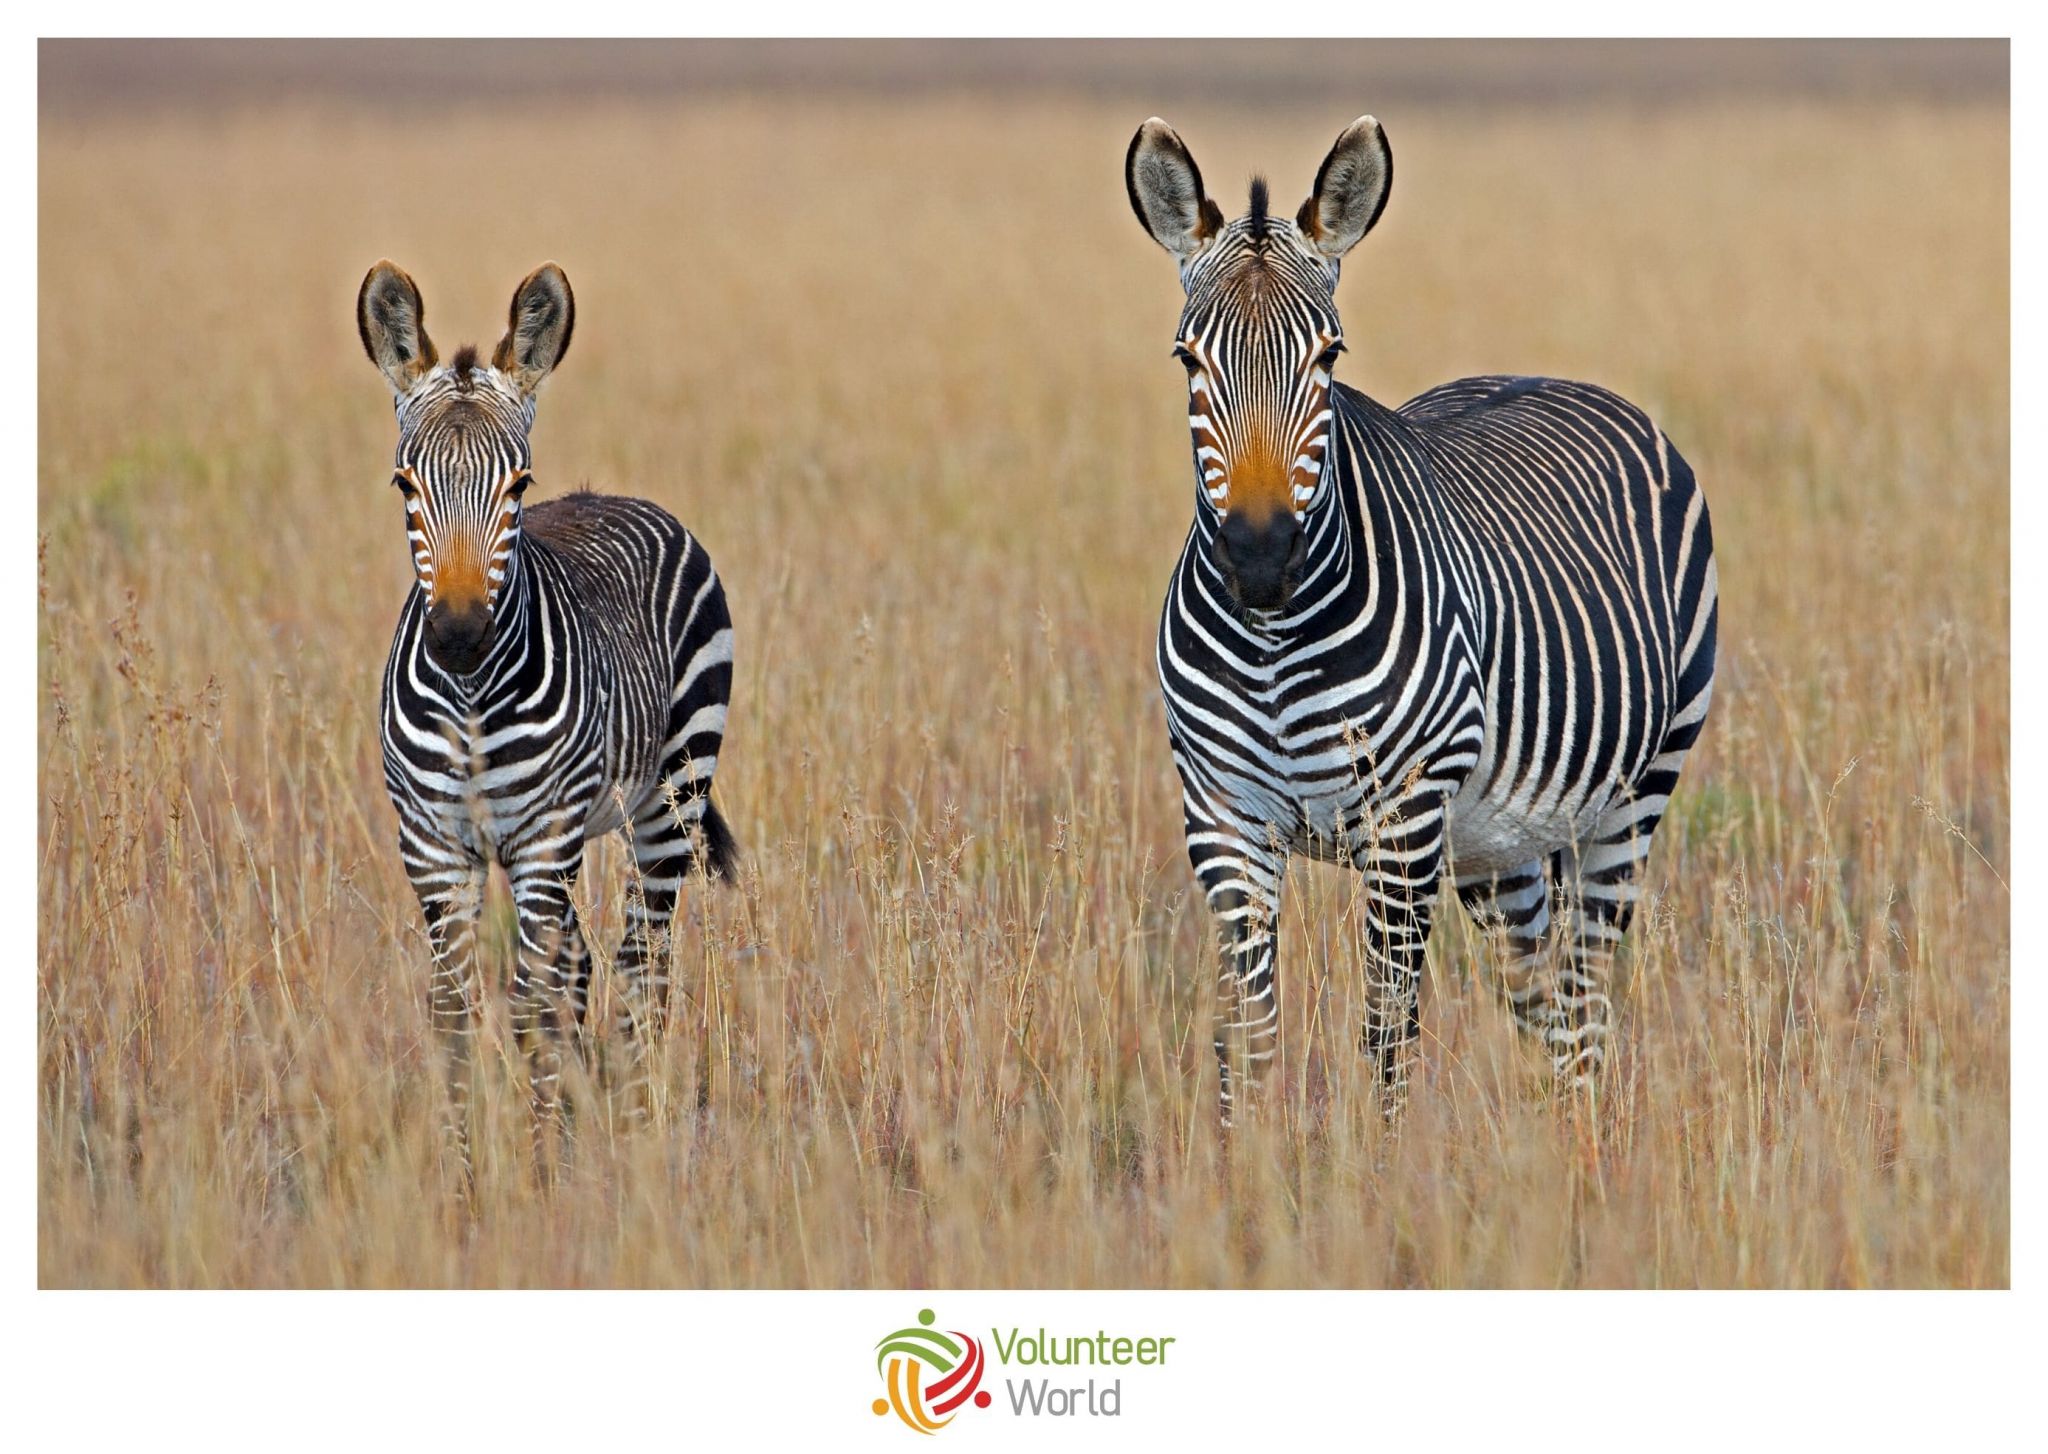 Zebras in south Africa, seen by volunteering in May 